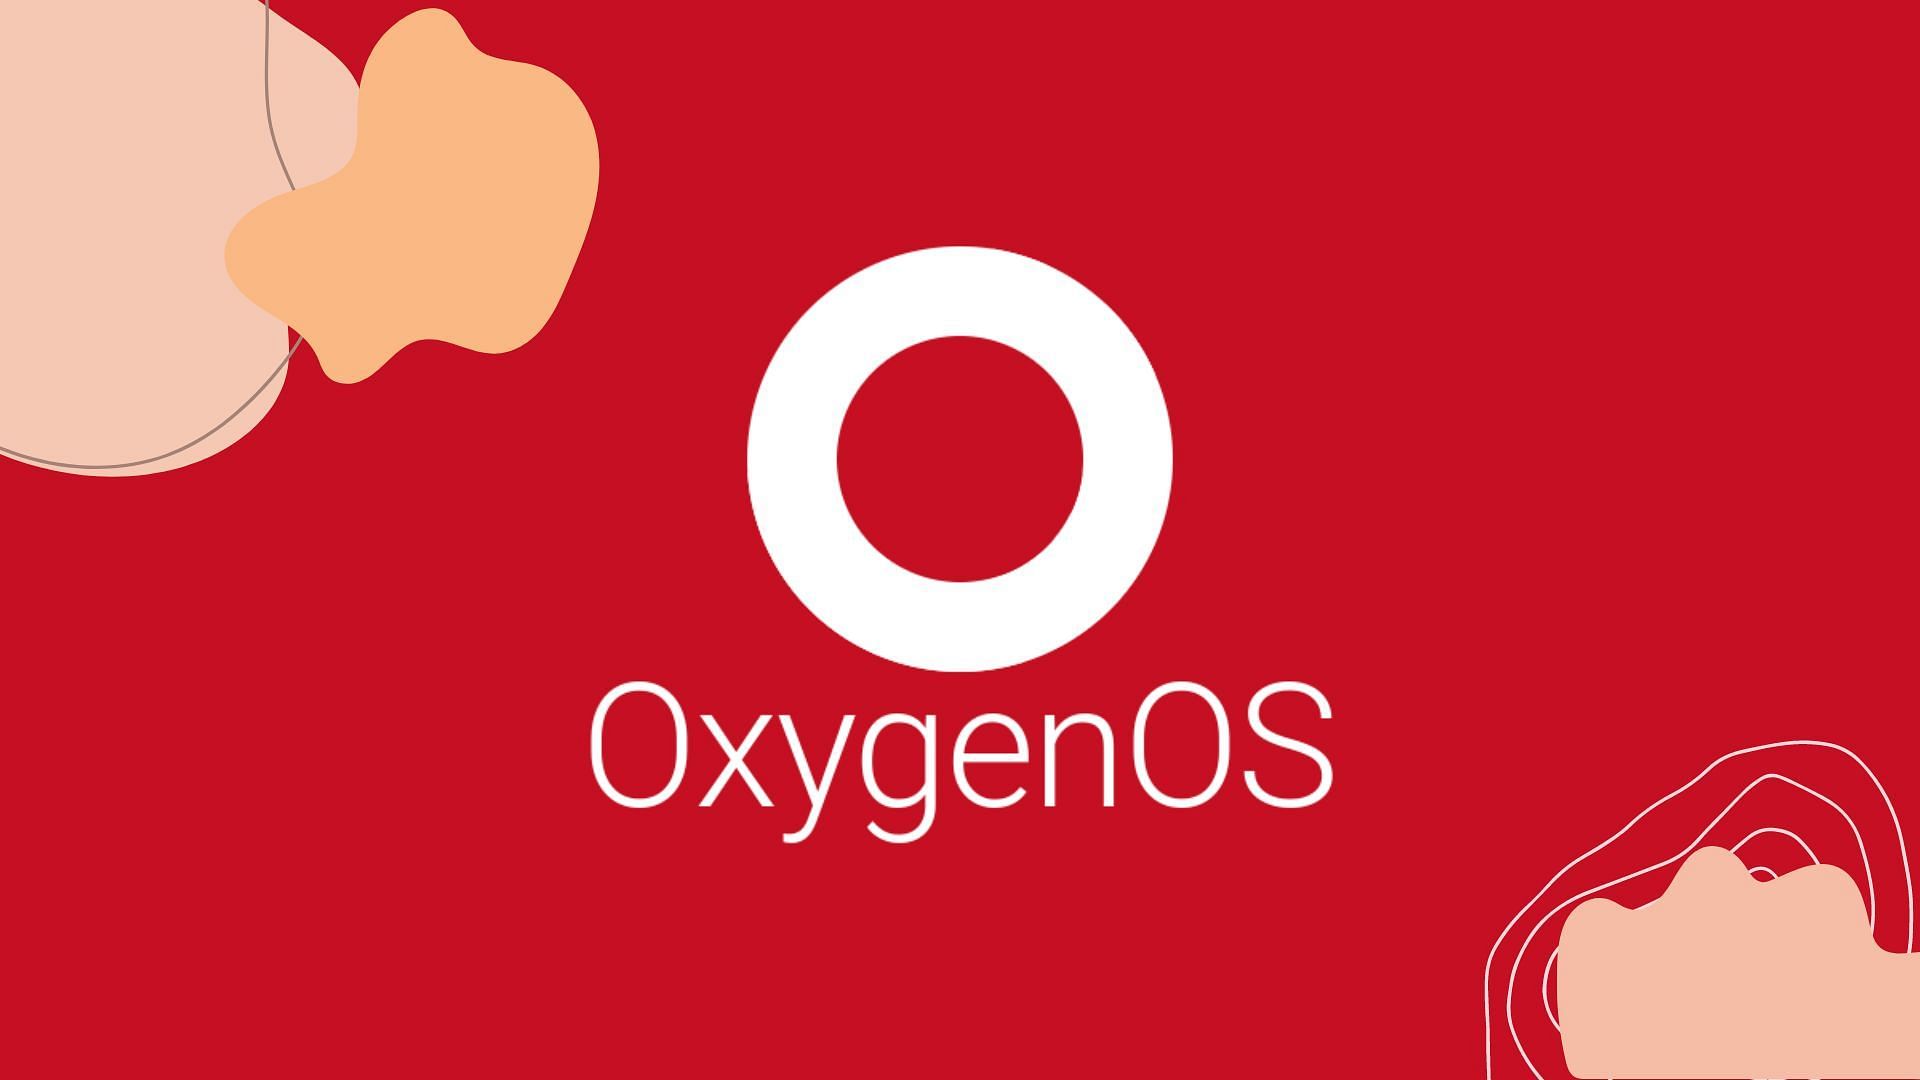 The OxygenOS logo (Image via Sportskeeda)